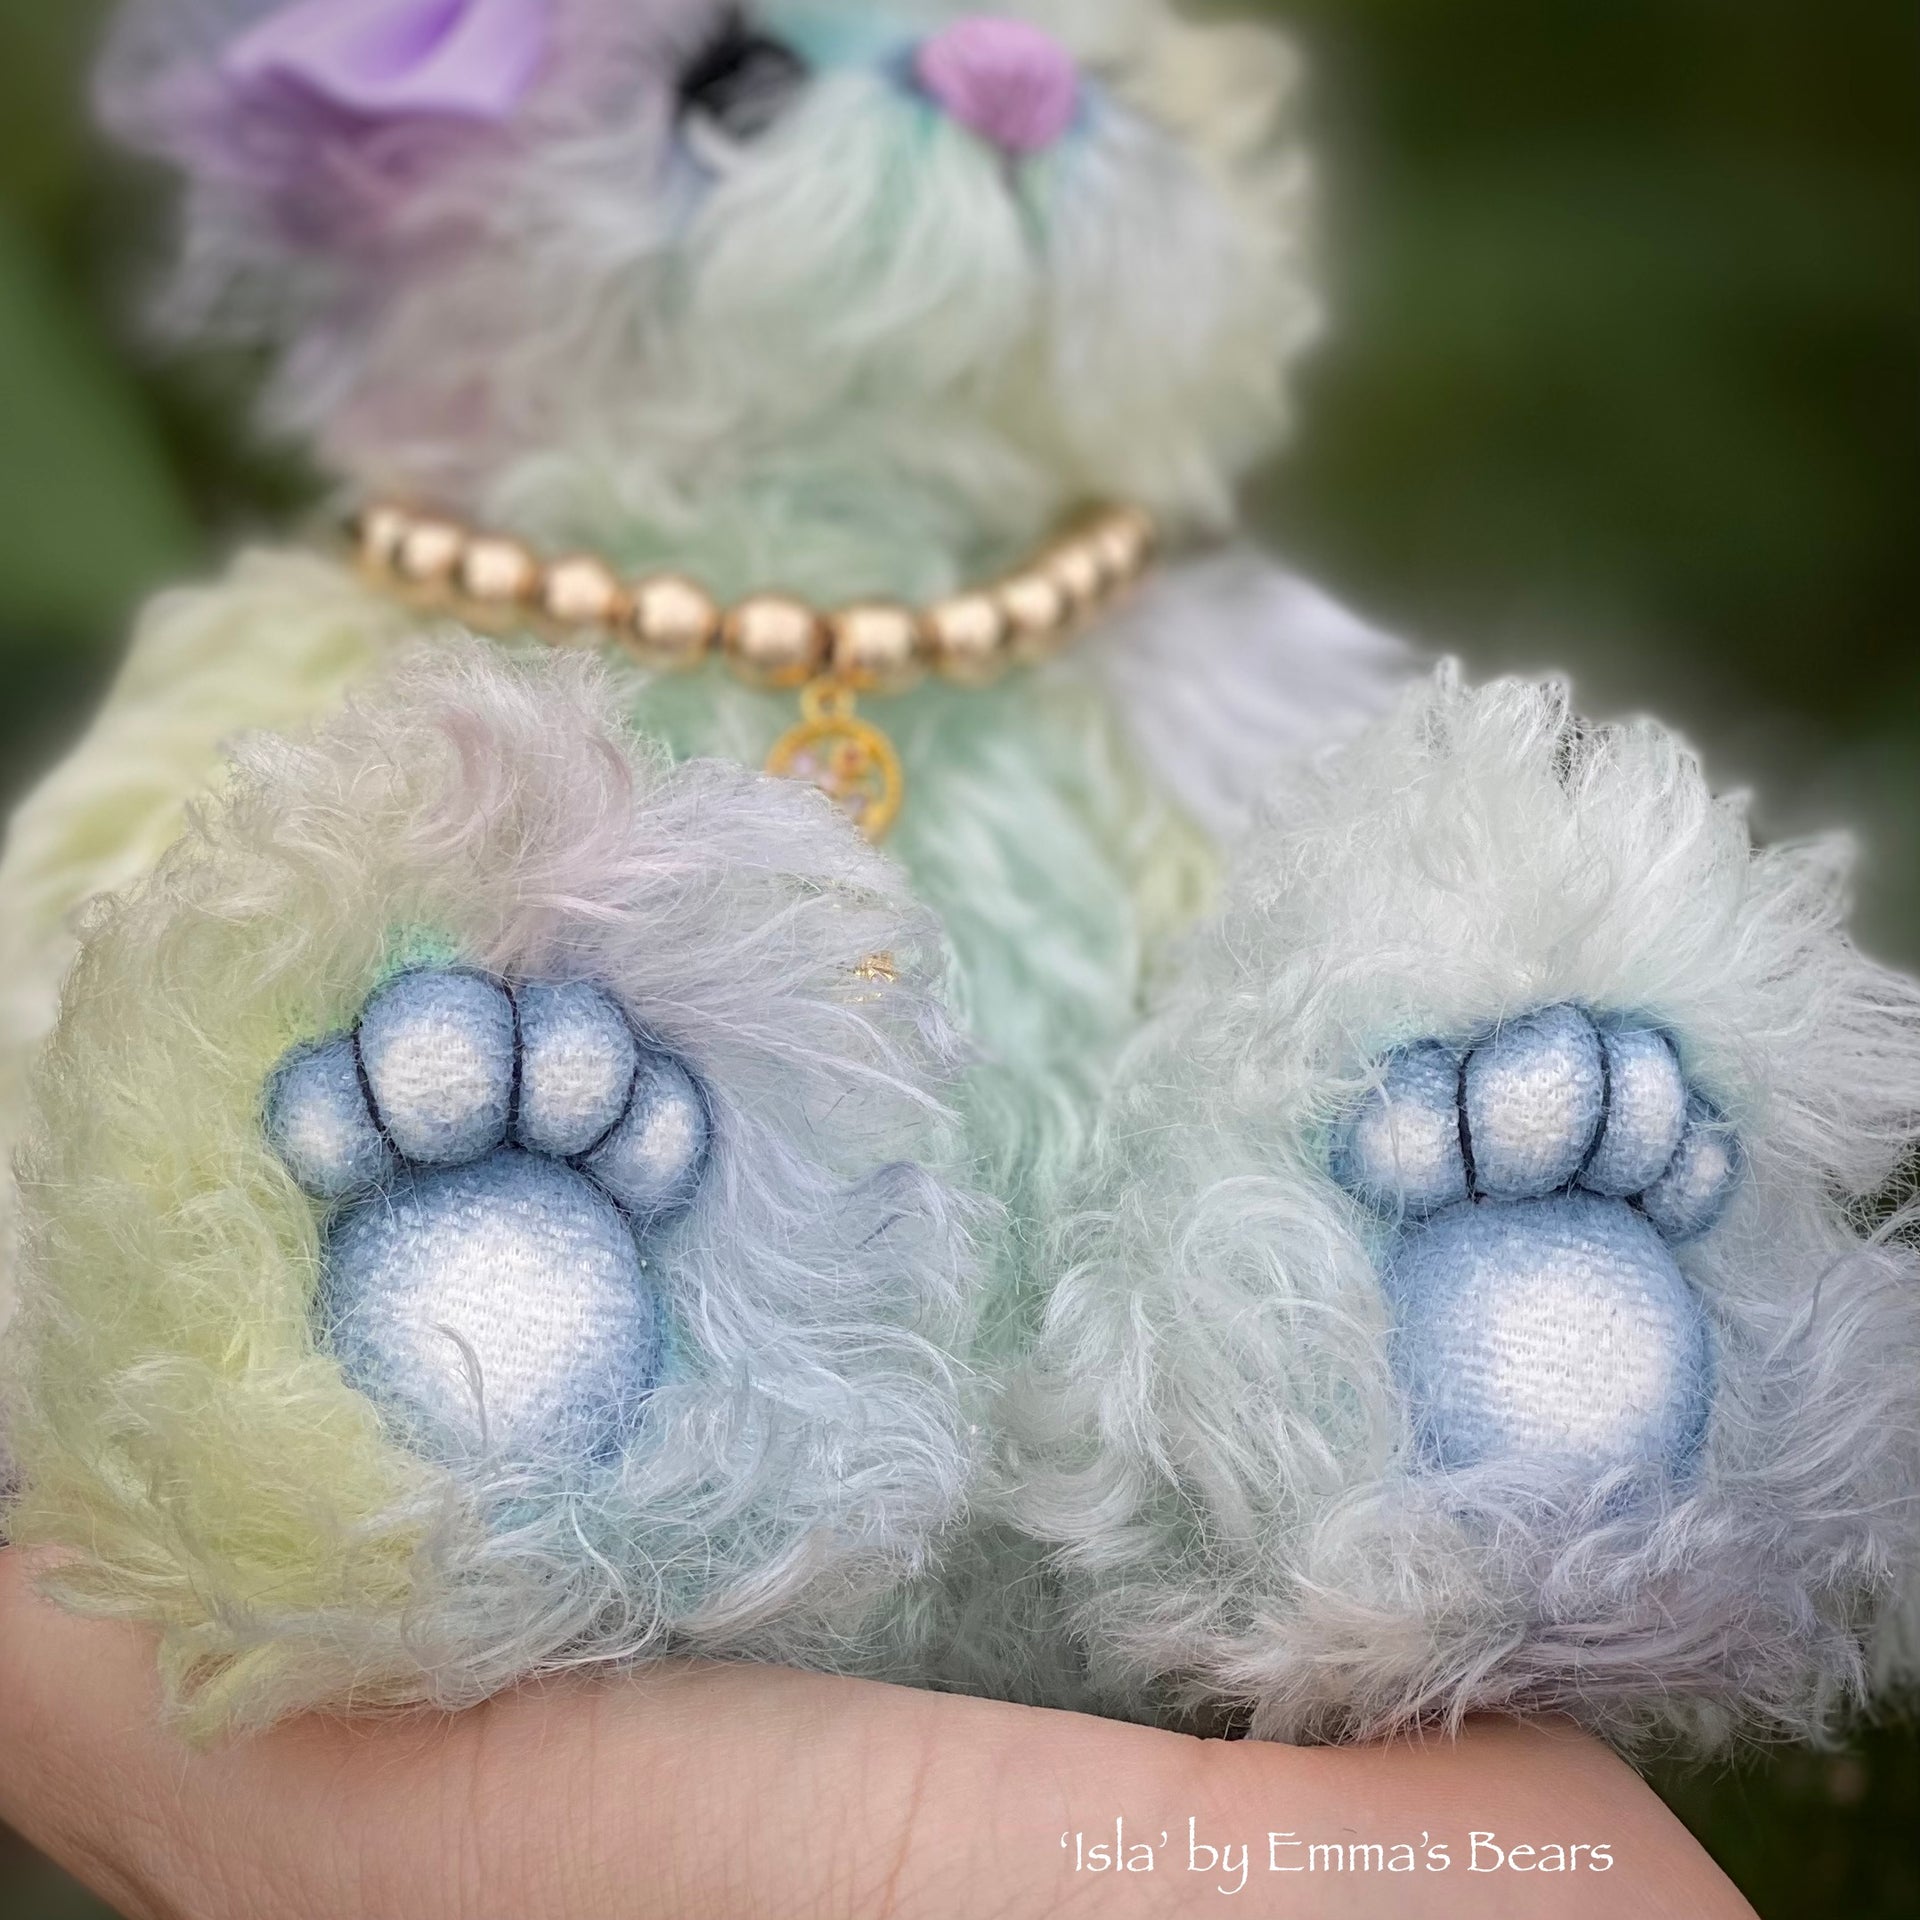 Isla - 8" Hand Dyed Curly Kid Mohair Artist Bear by Emma's Bears - OOAK